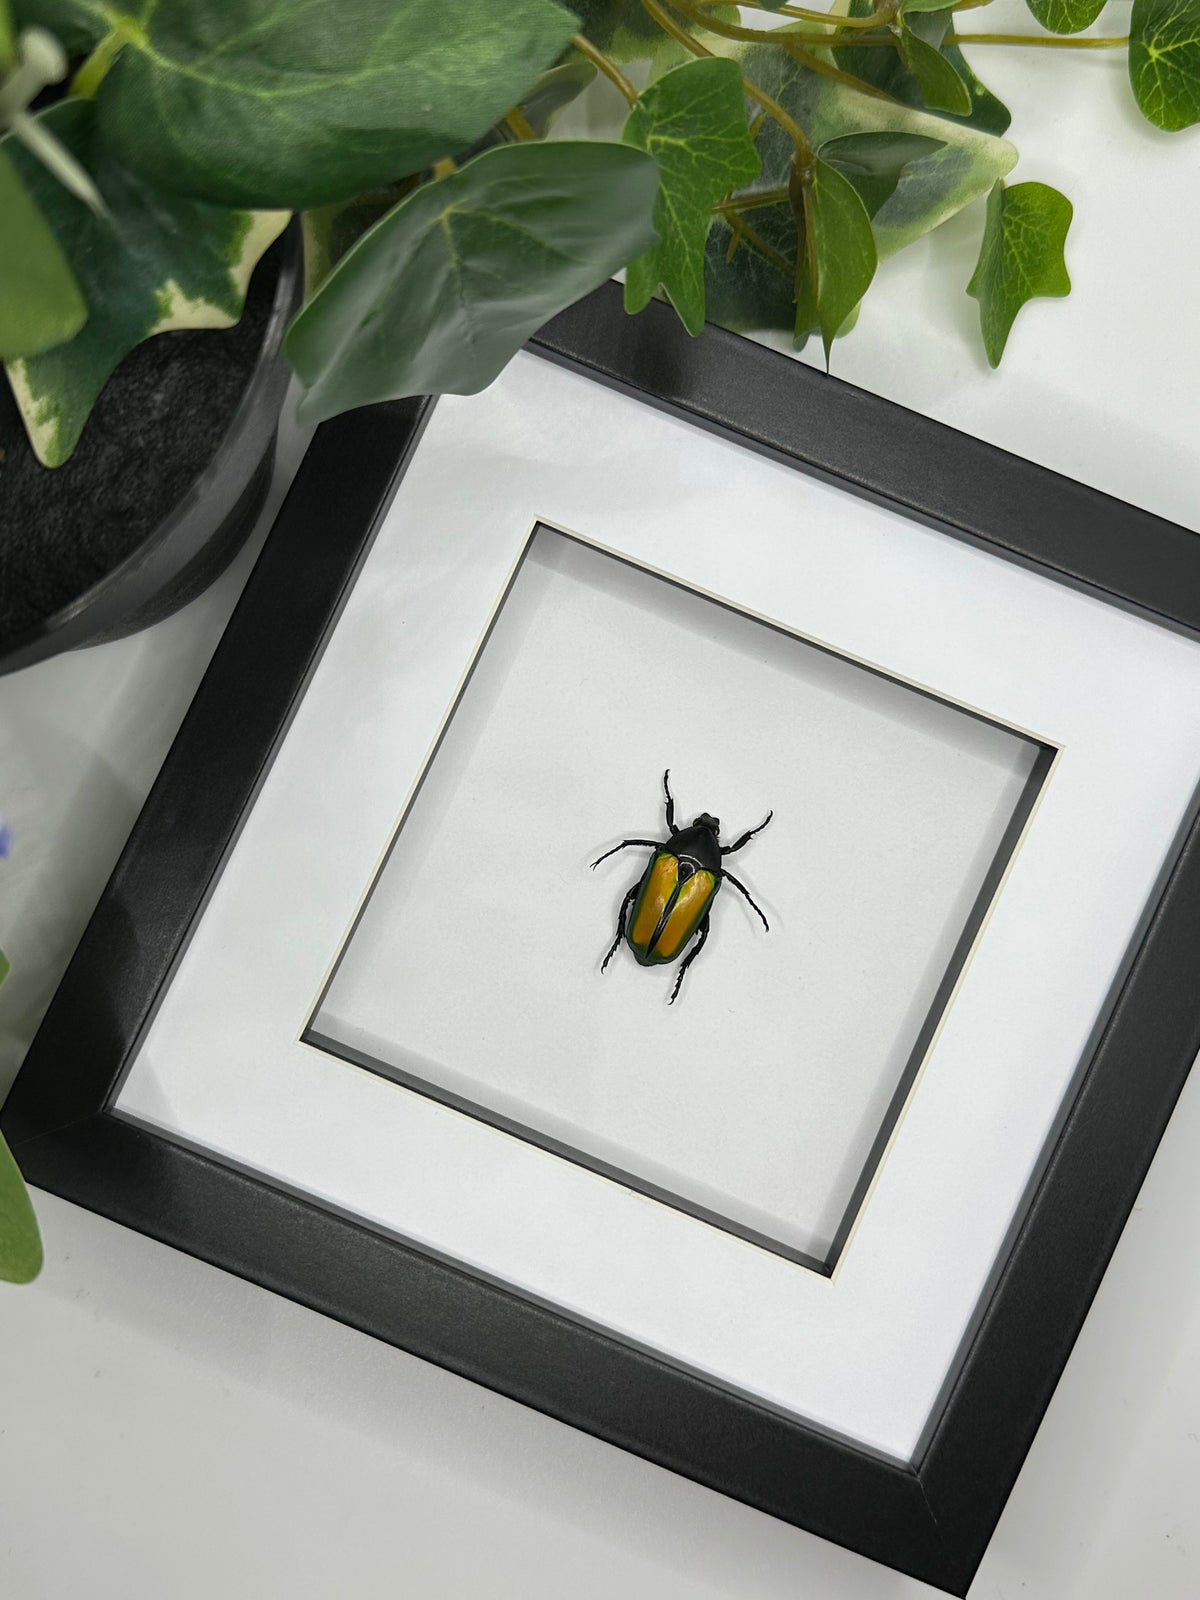 Flower Beetle / Caelorrhina Semiviridis in a frame